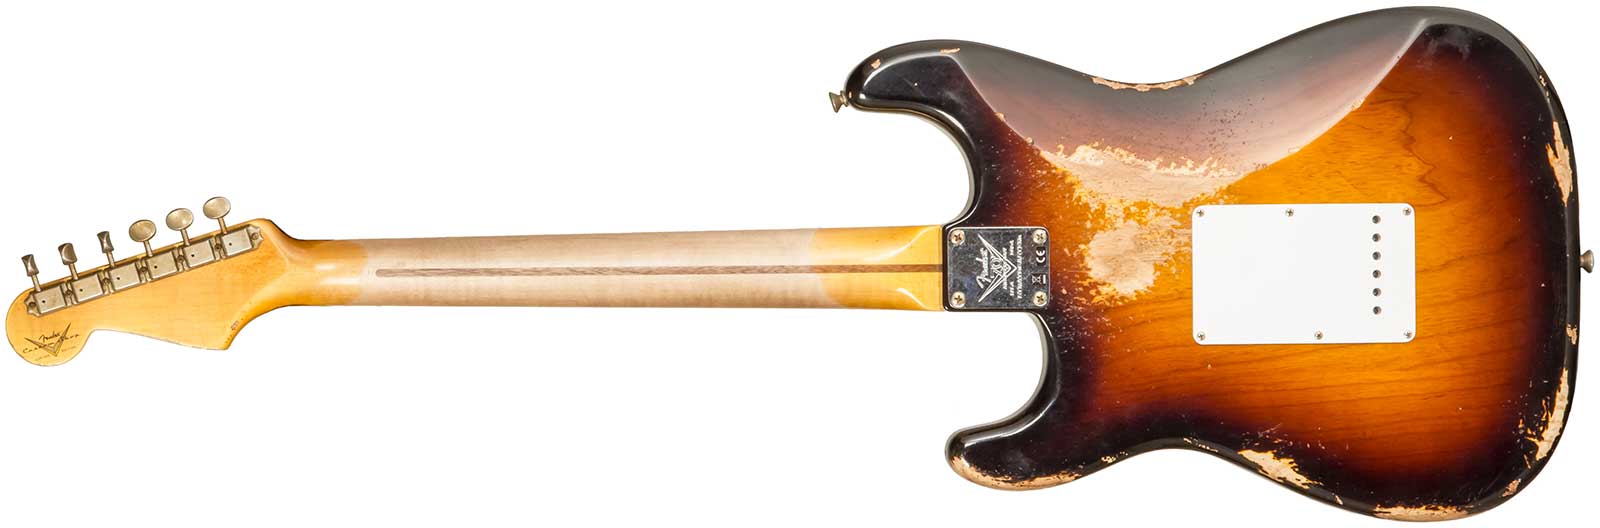 Fender Custom Shop Strat 1954 70th Anniv. 3s Trem Mn #xn4308 - Heavy Relic Wide Fade 2-color Sunburst - Str shape electric guitar - Variation 1